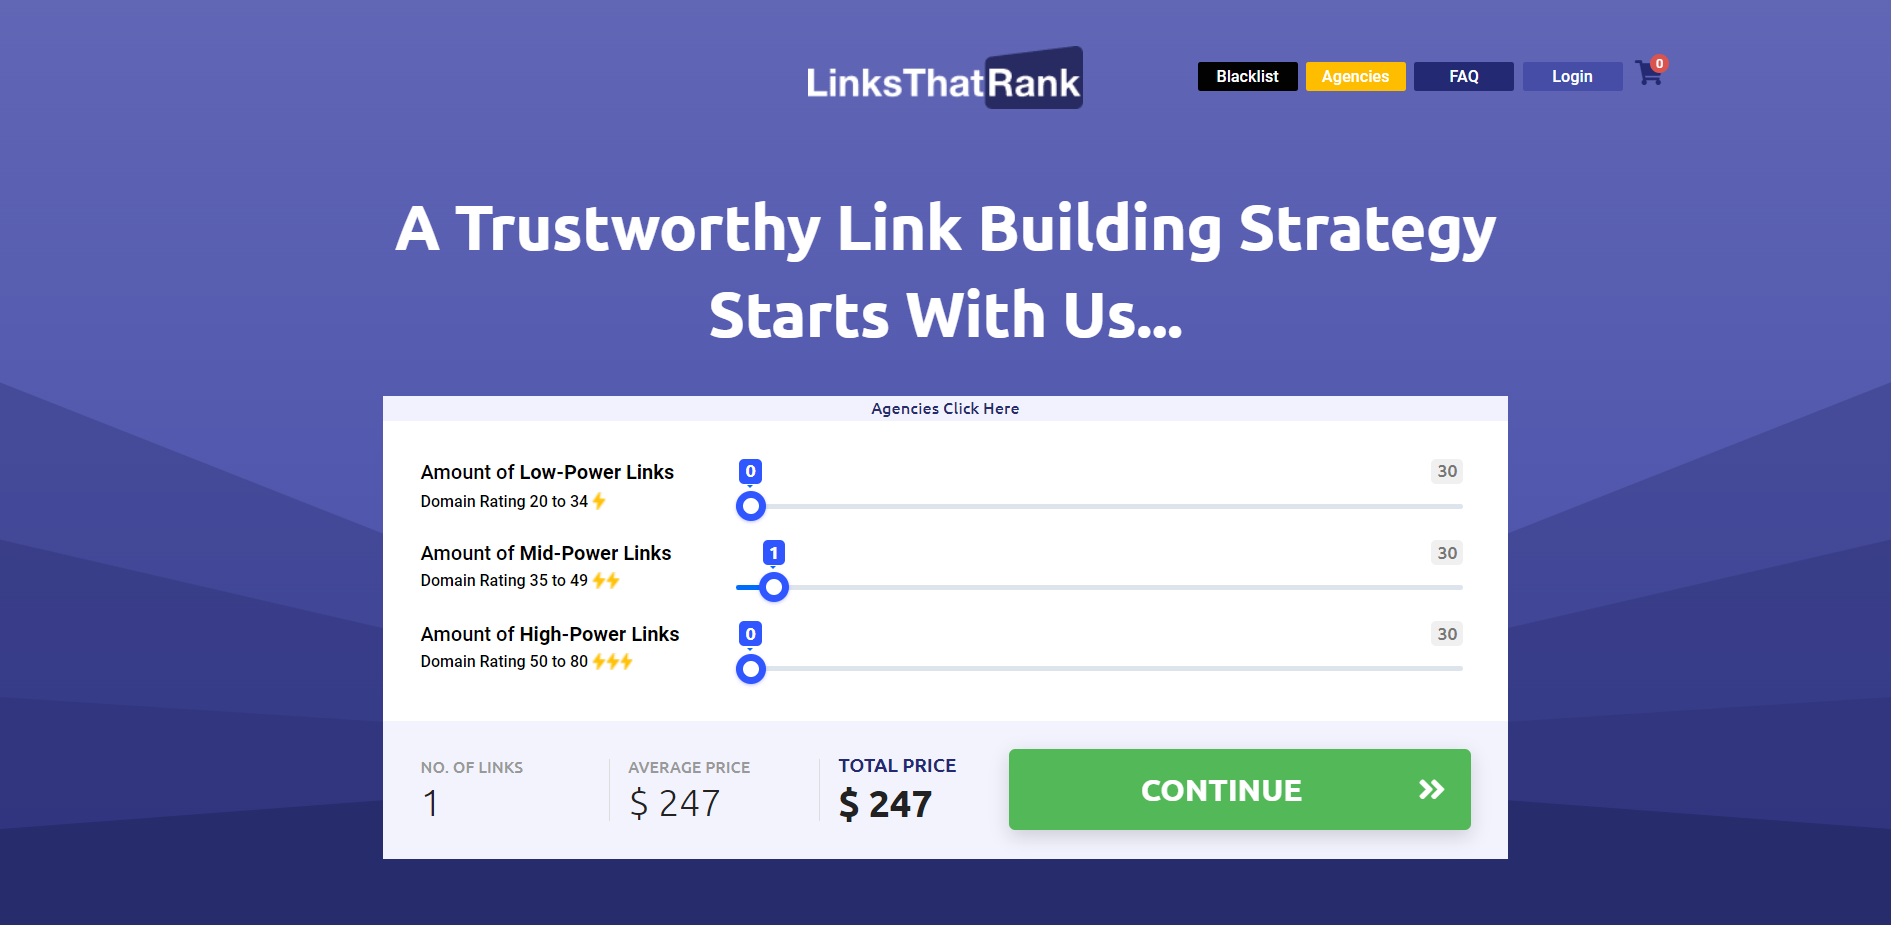 Links That Rank